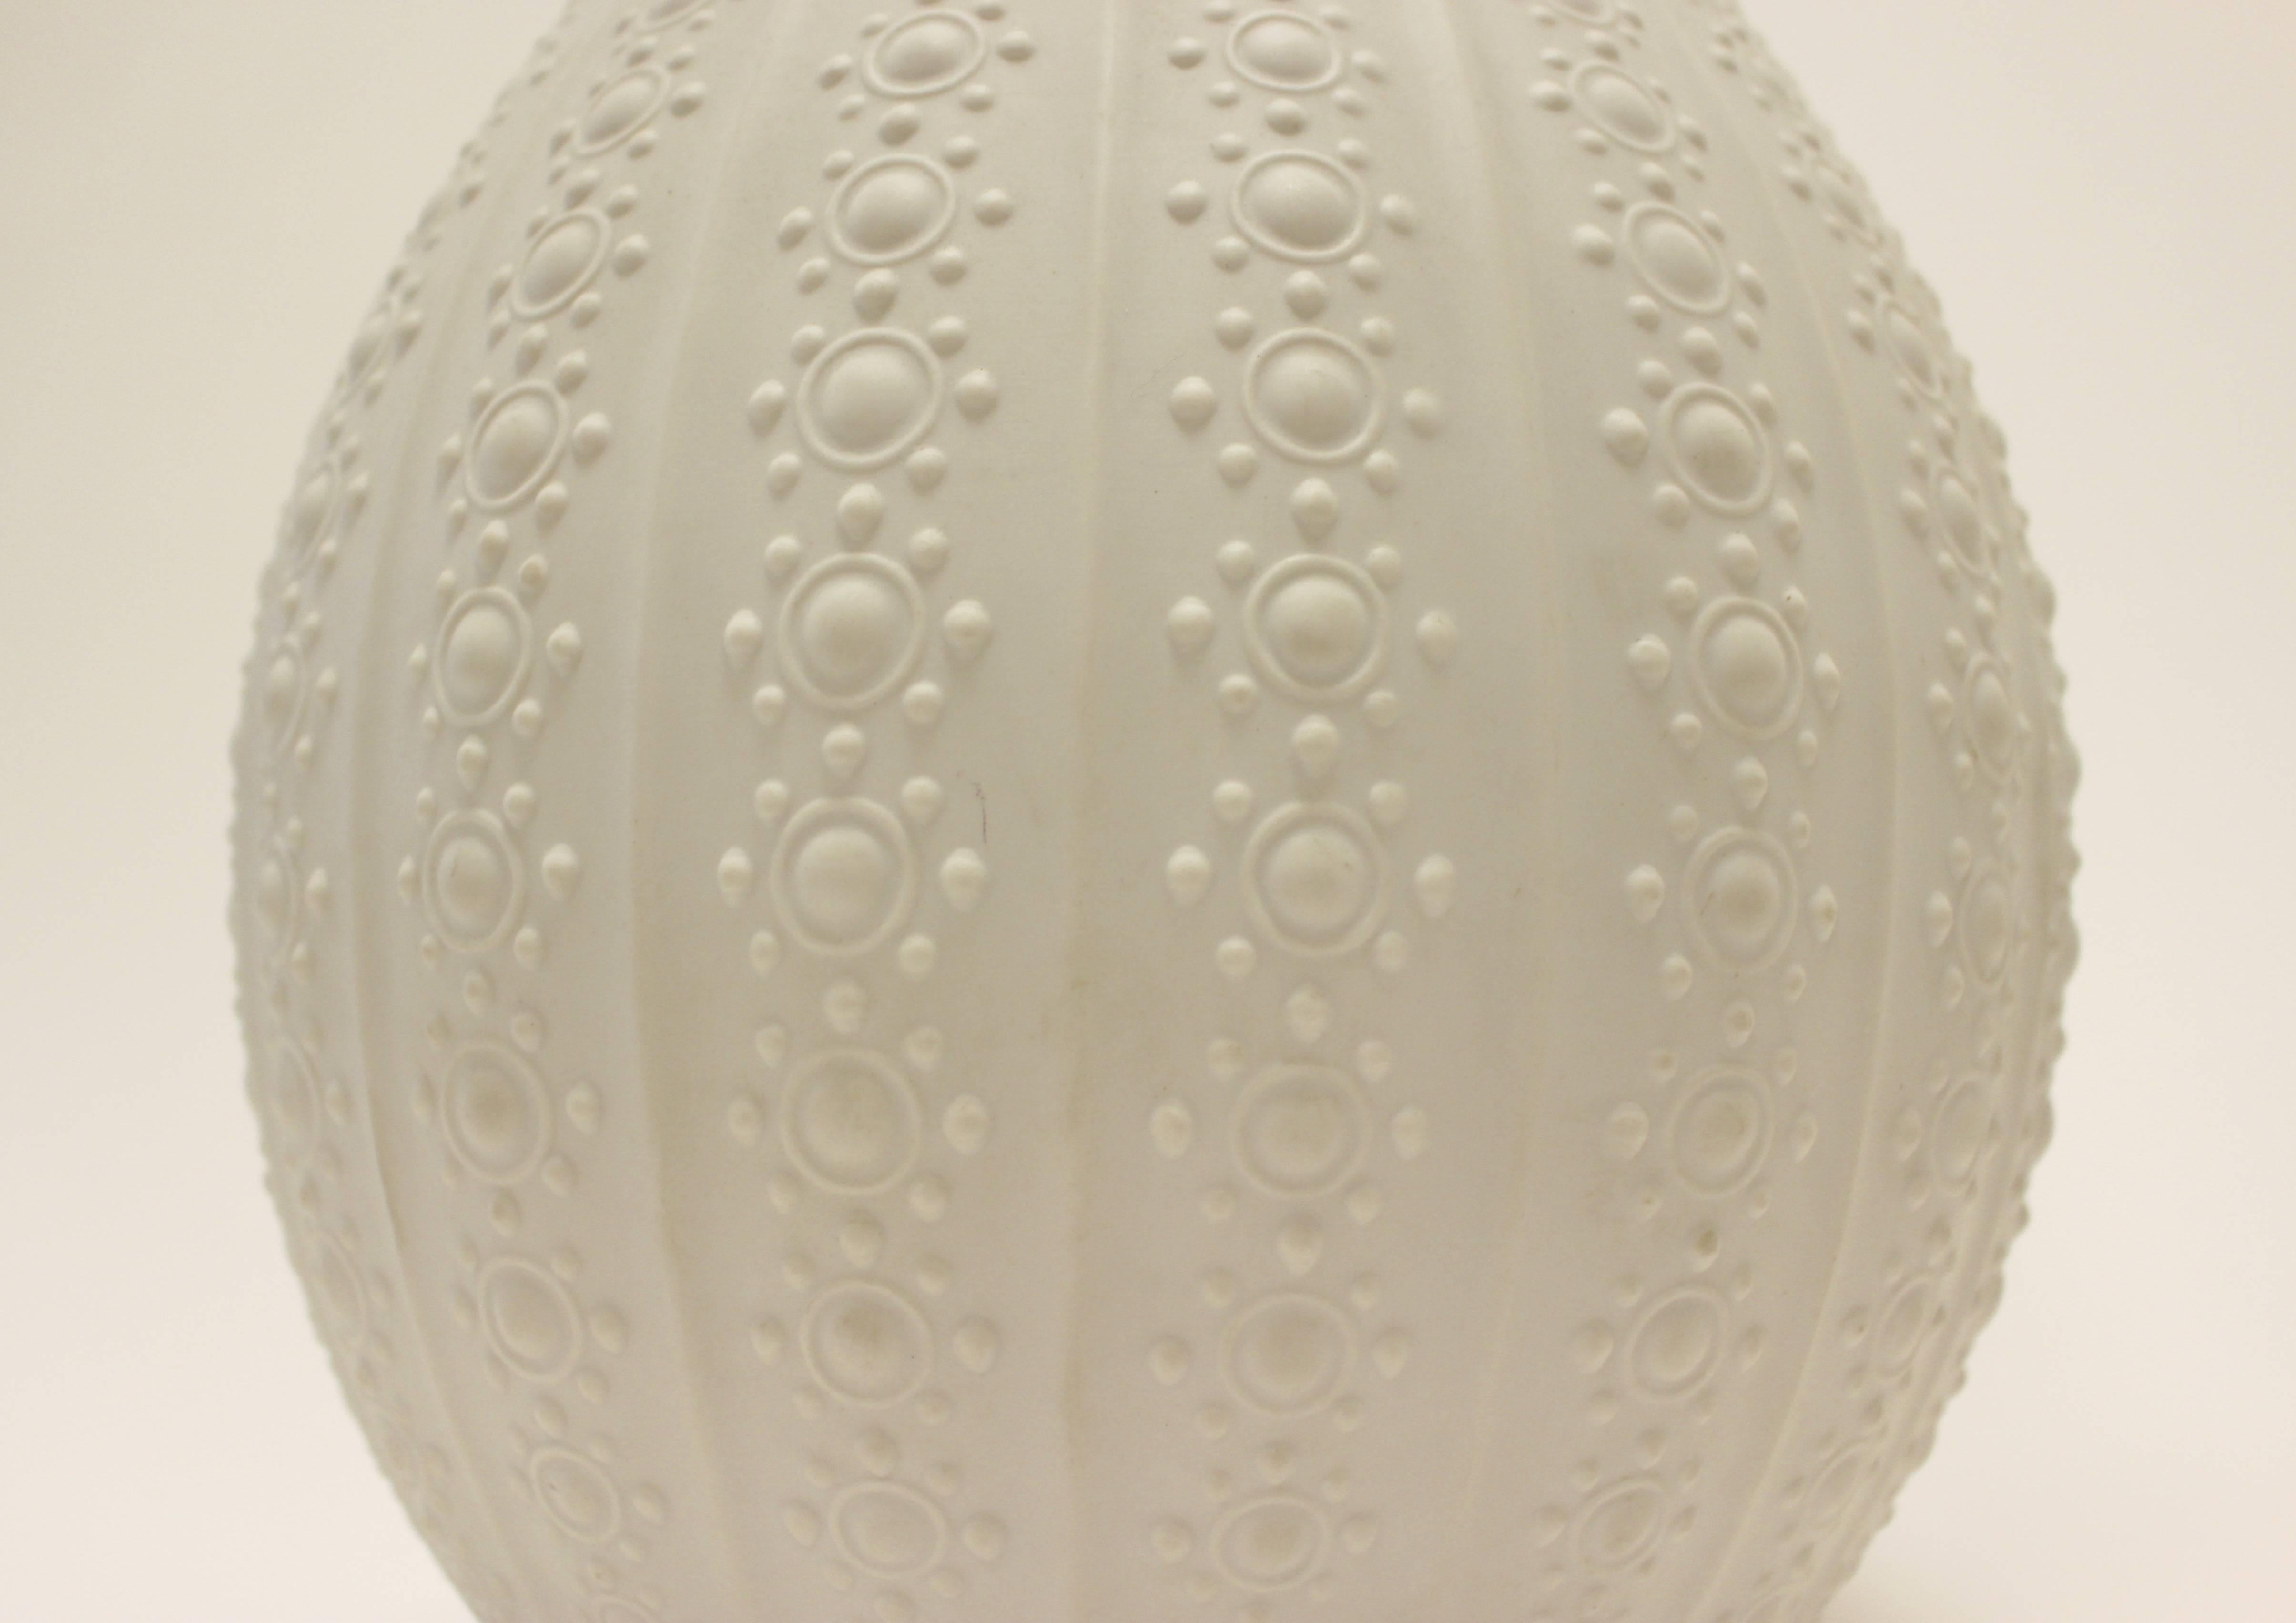 German Heinrich & Co. 1960s Matte White Porcelain Floor Vase with Relief Decoration For Sale